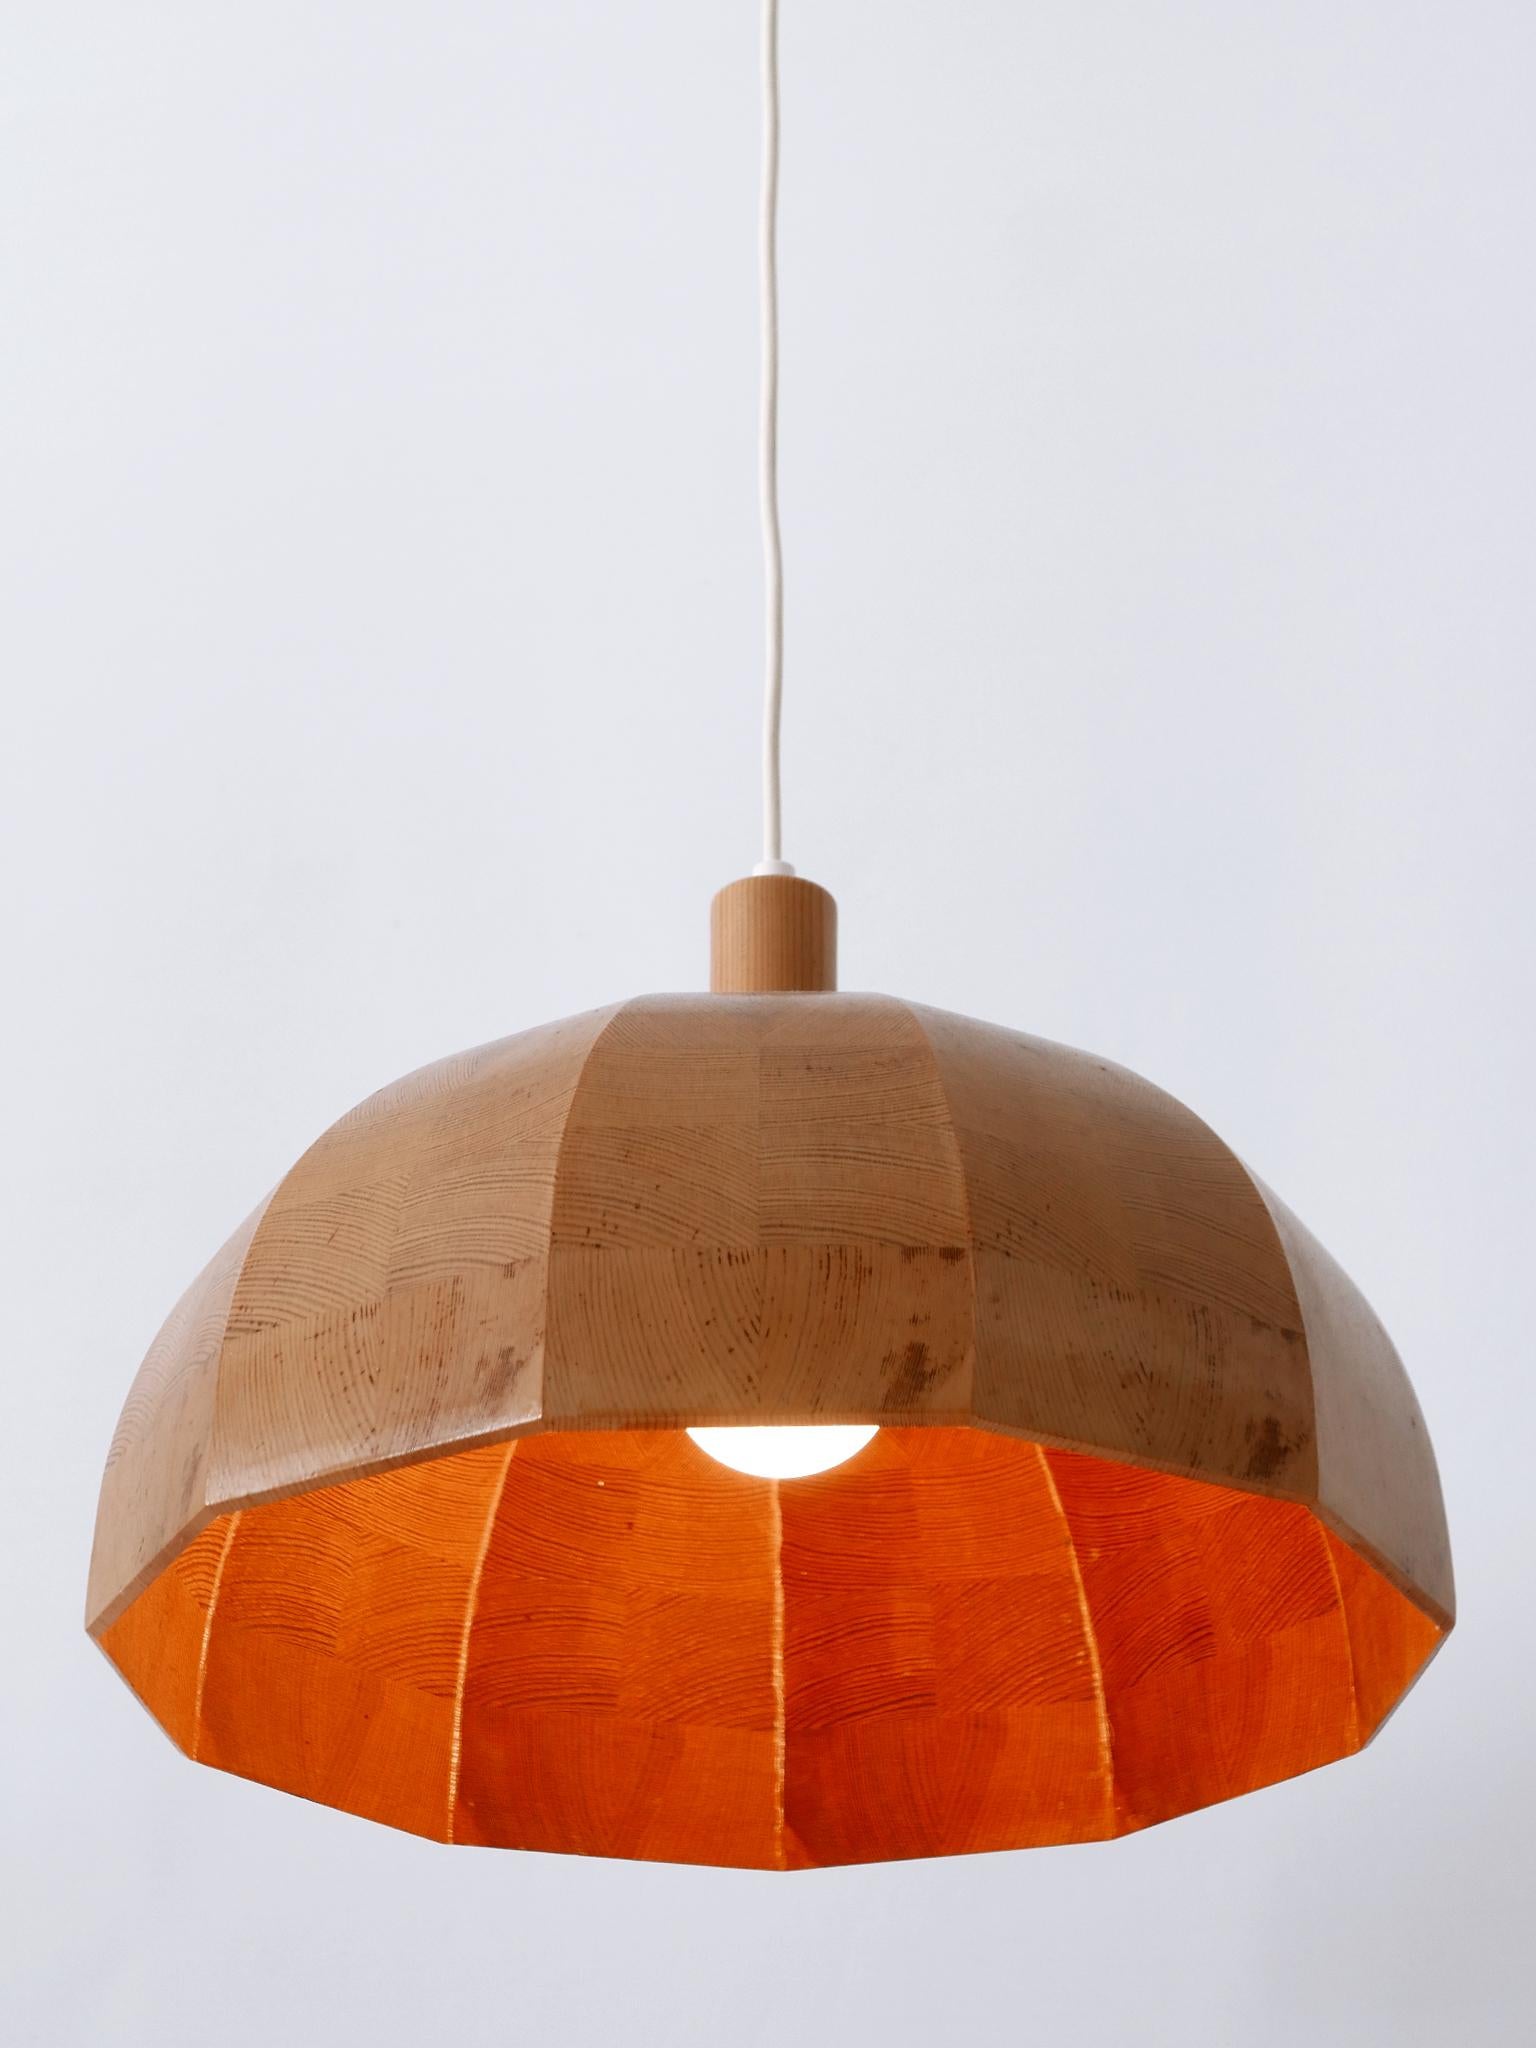 Rare Mid-Century Modern Pine Wood Pendant Lamp or Hanging Light Sweden, 1960s For Sale 7